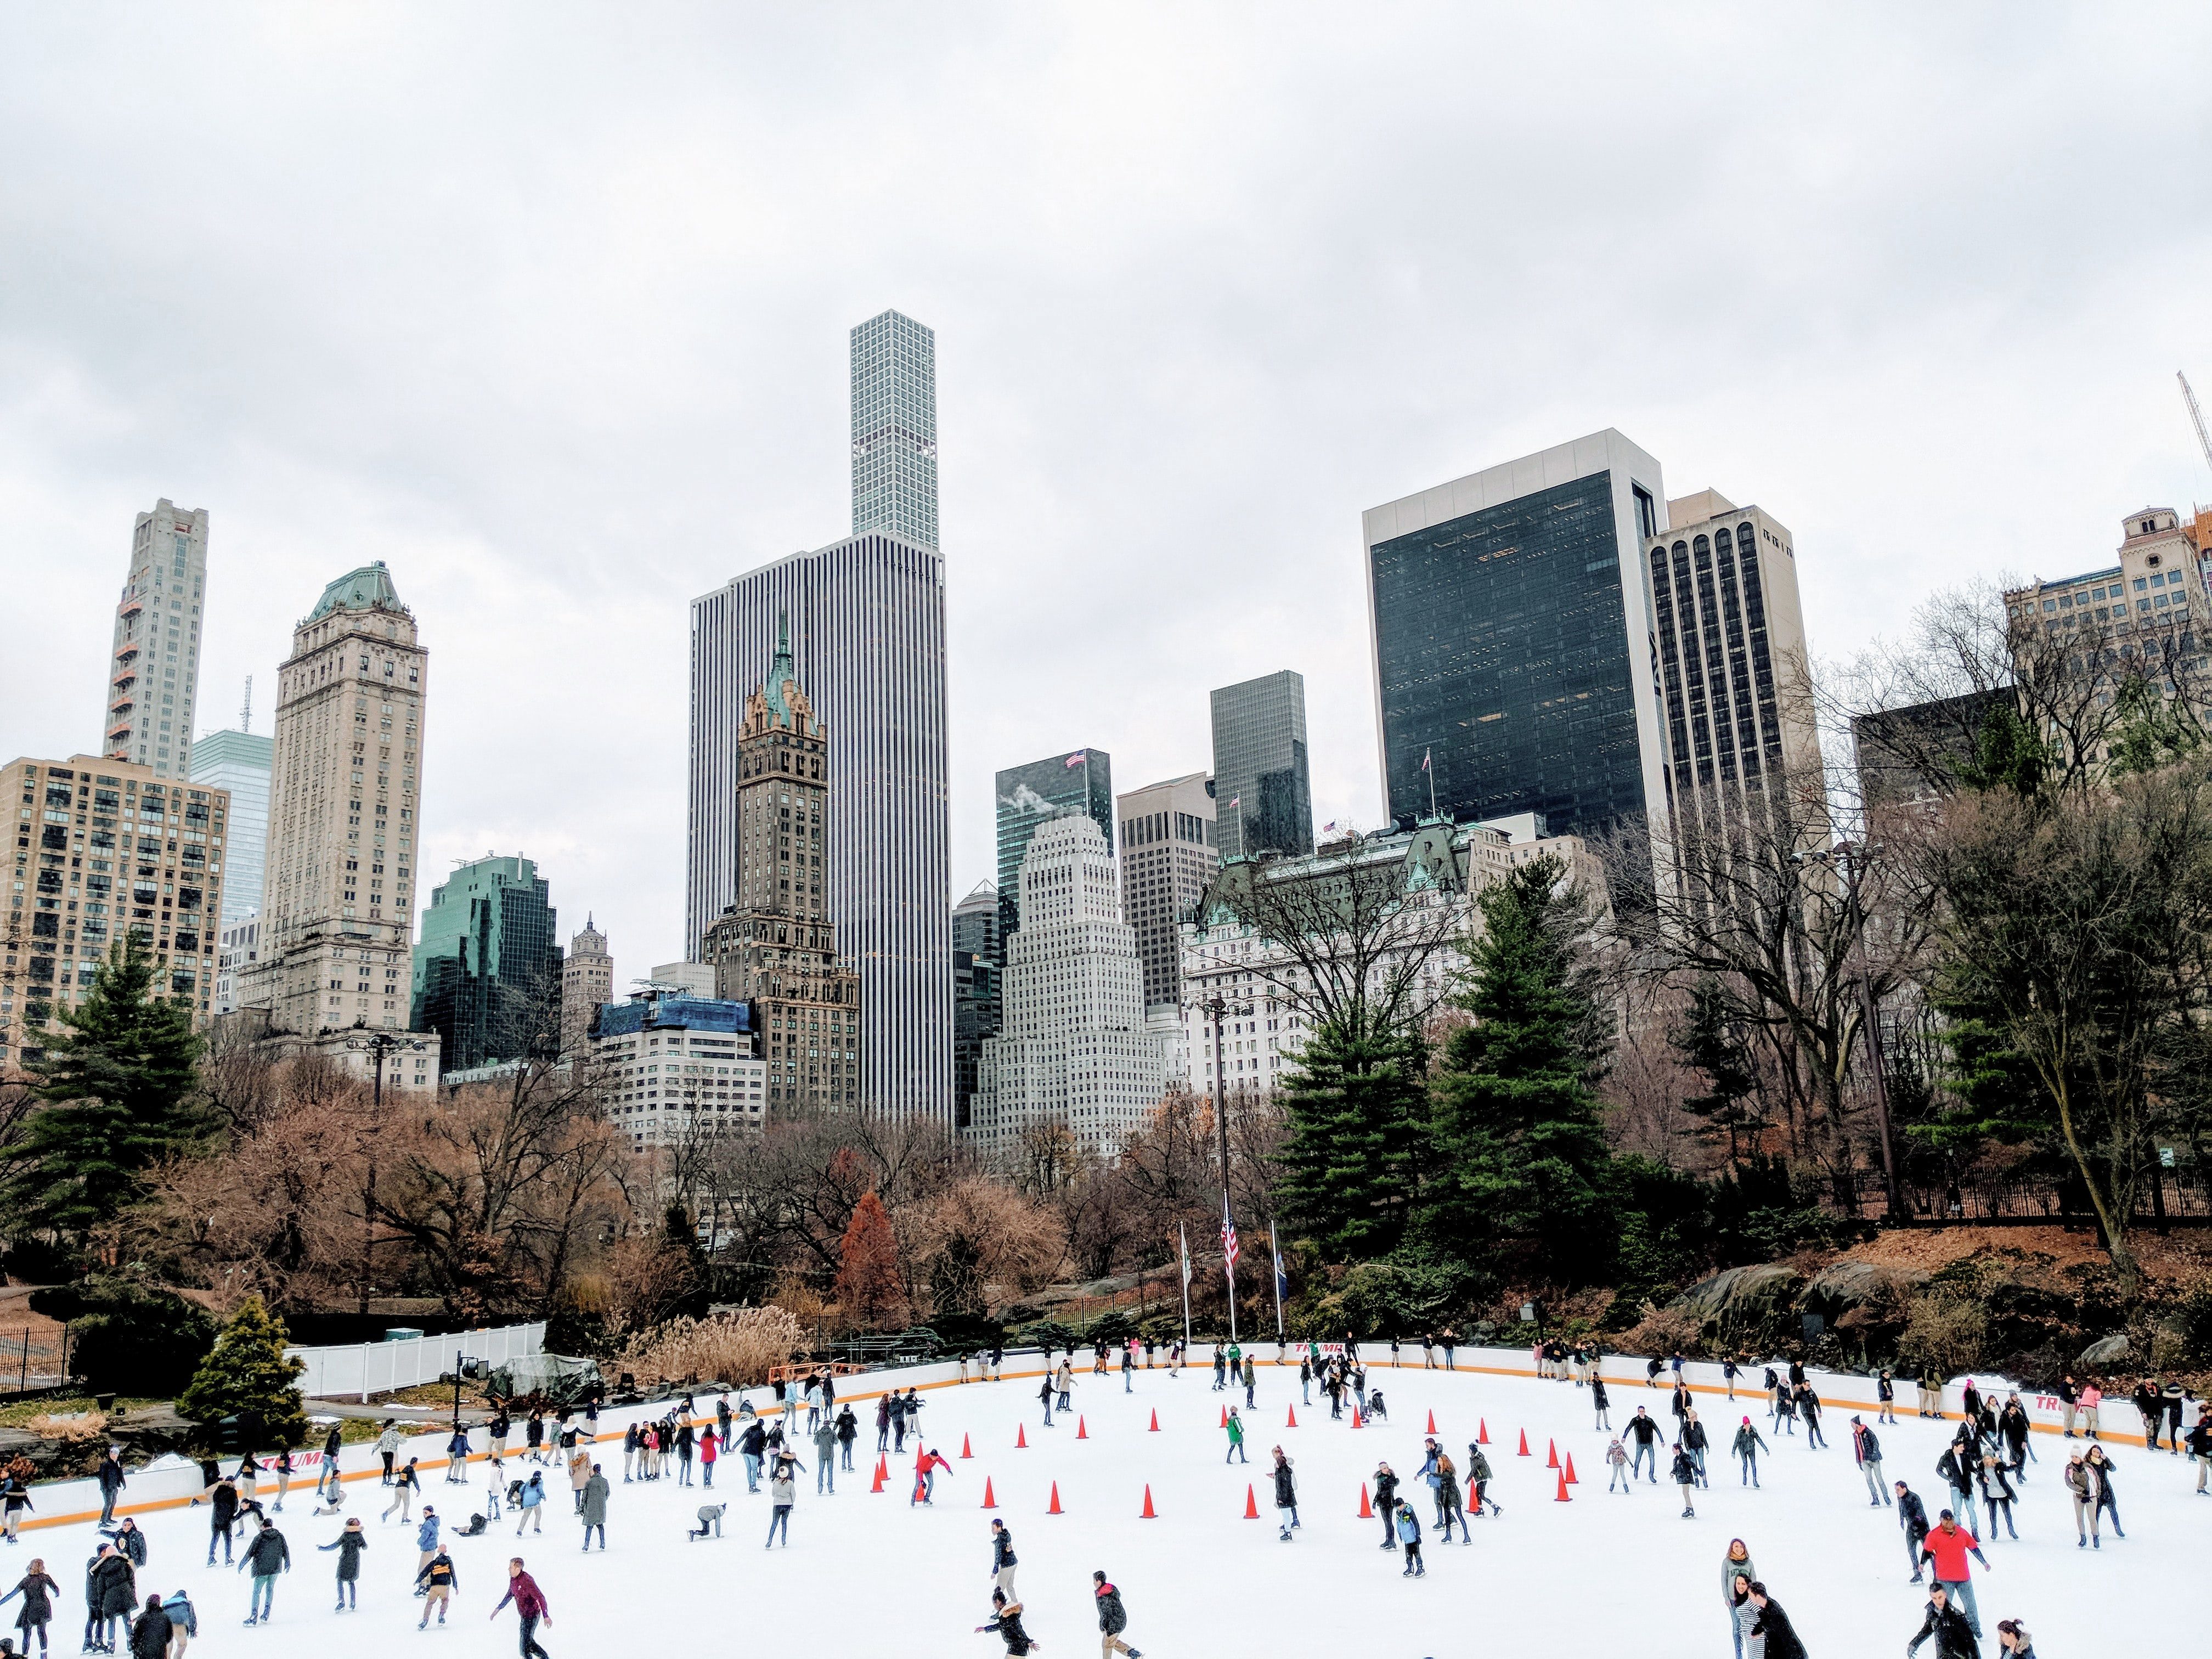 ice skating rink in Central Park New York City